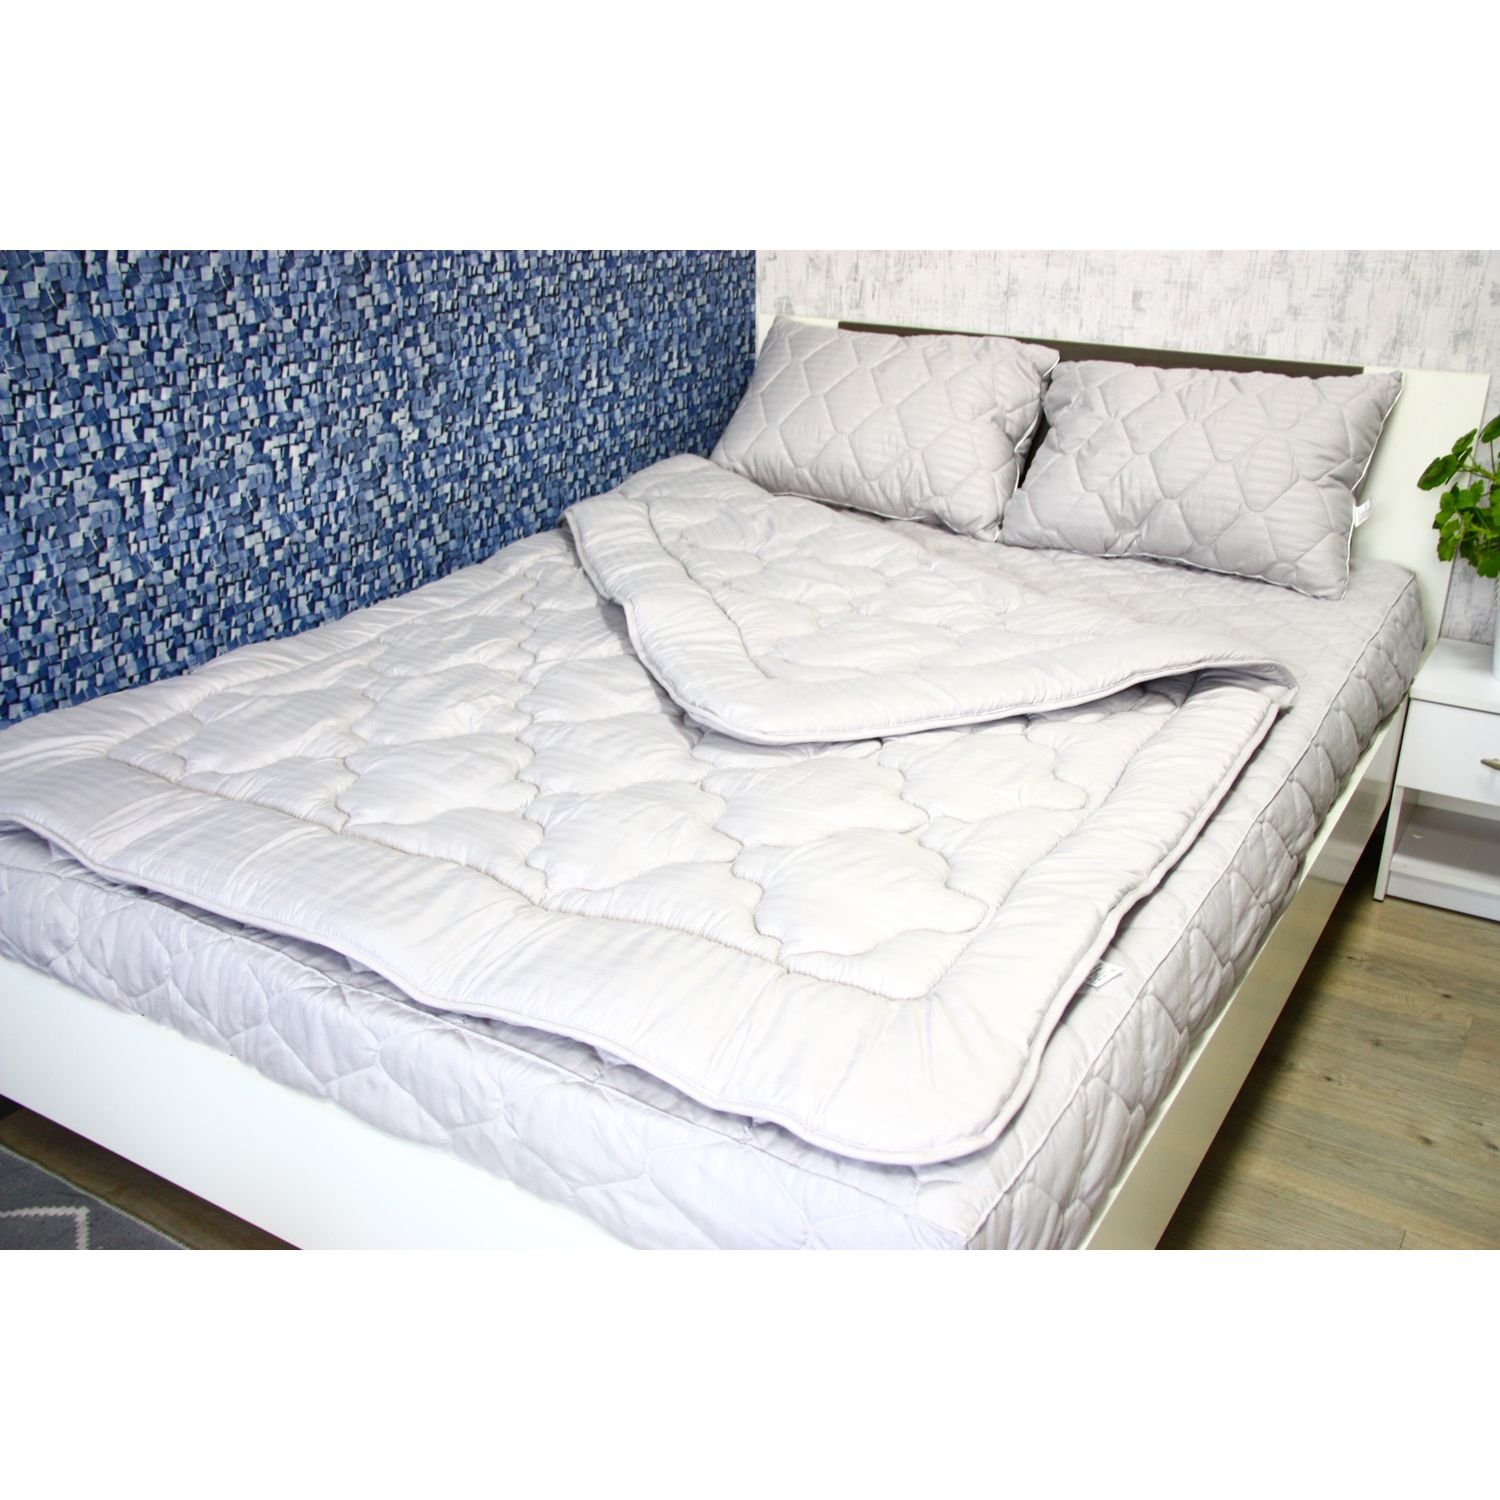 Одеяло LightHouse Soft Line Mf Stripe grey, 155х215 см, серое (602251) - фото 8